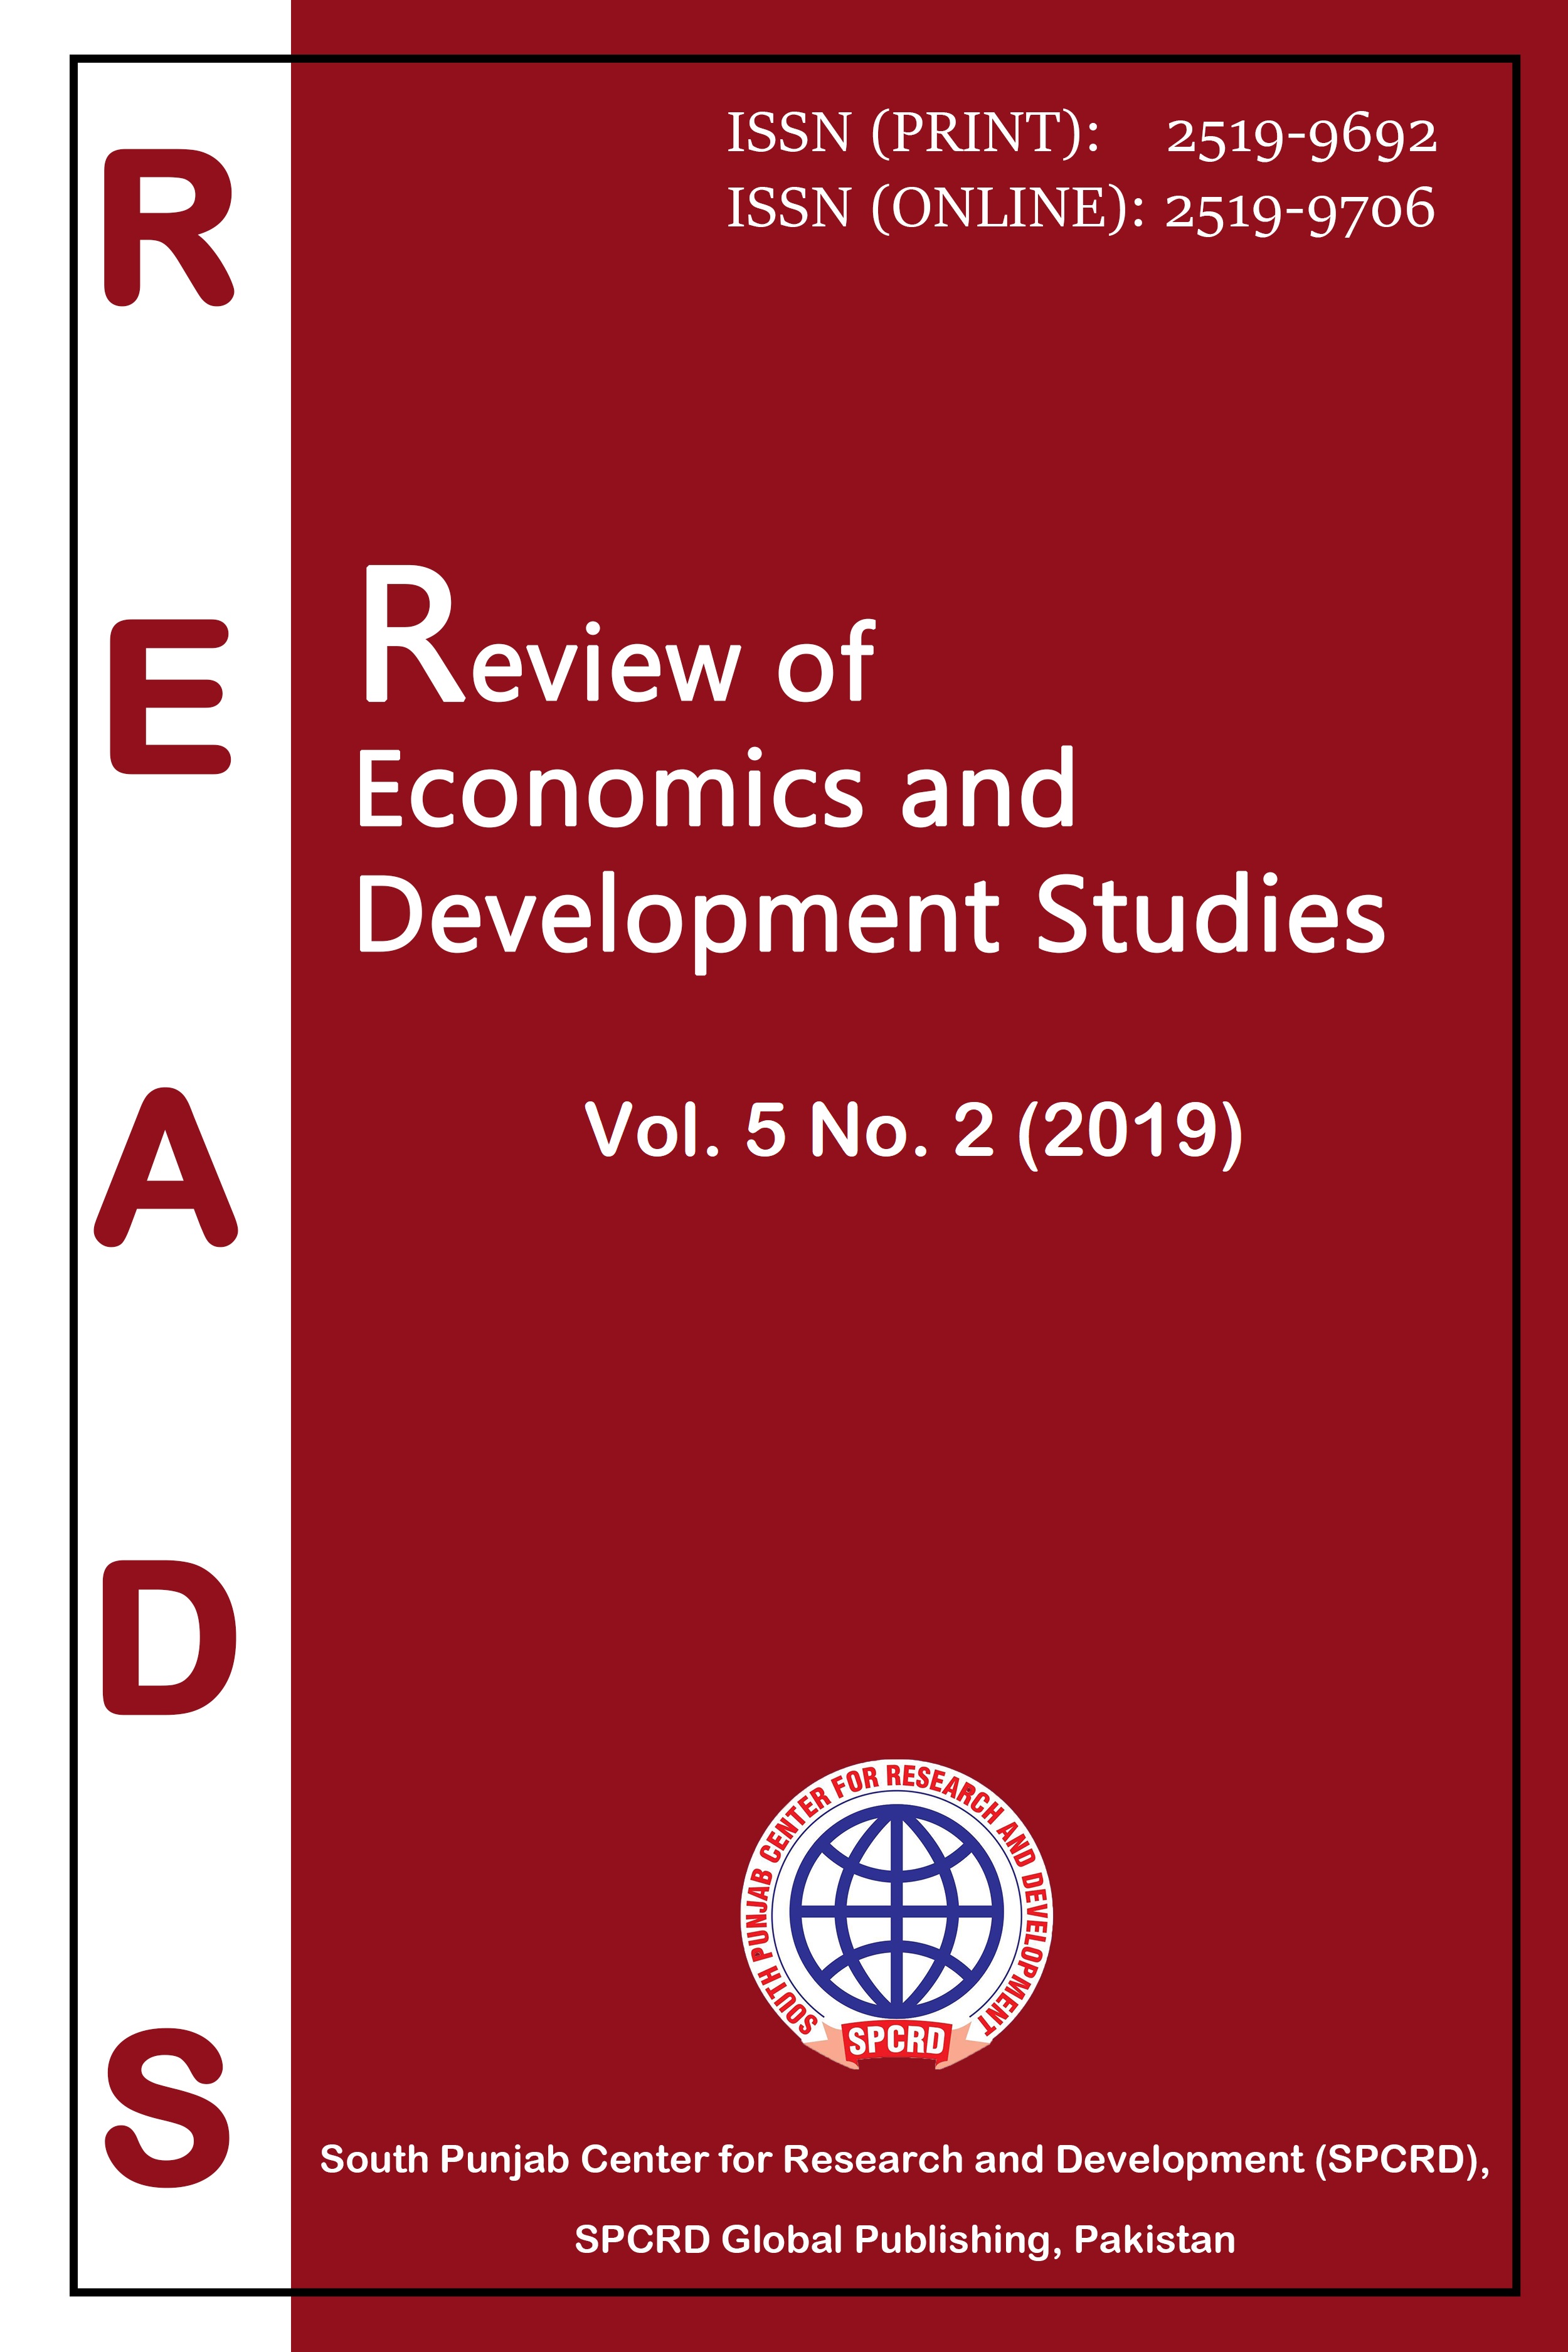 					View Vol. 5 No. 2 (2019): Review of Economics and Development Studies (READS)
				